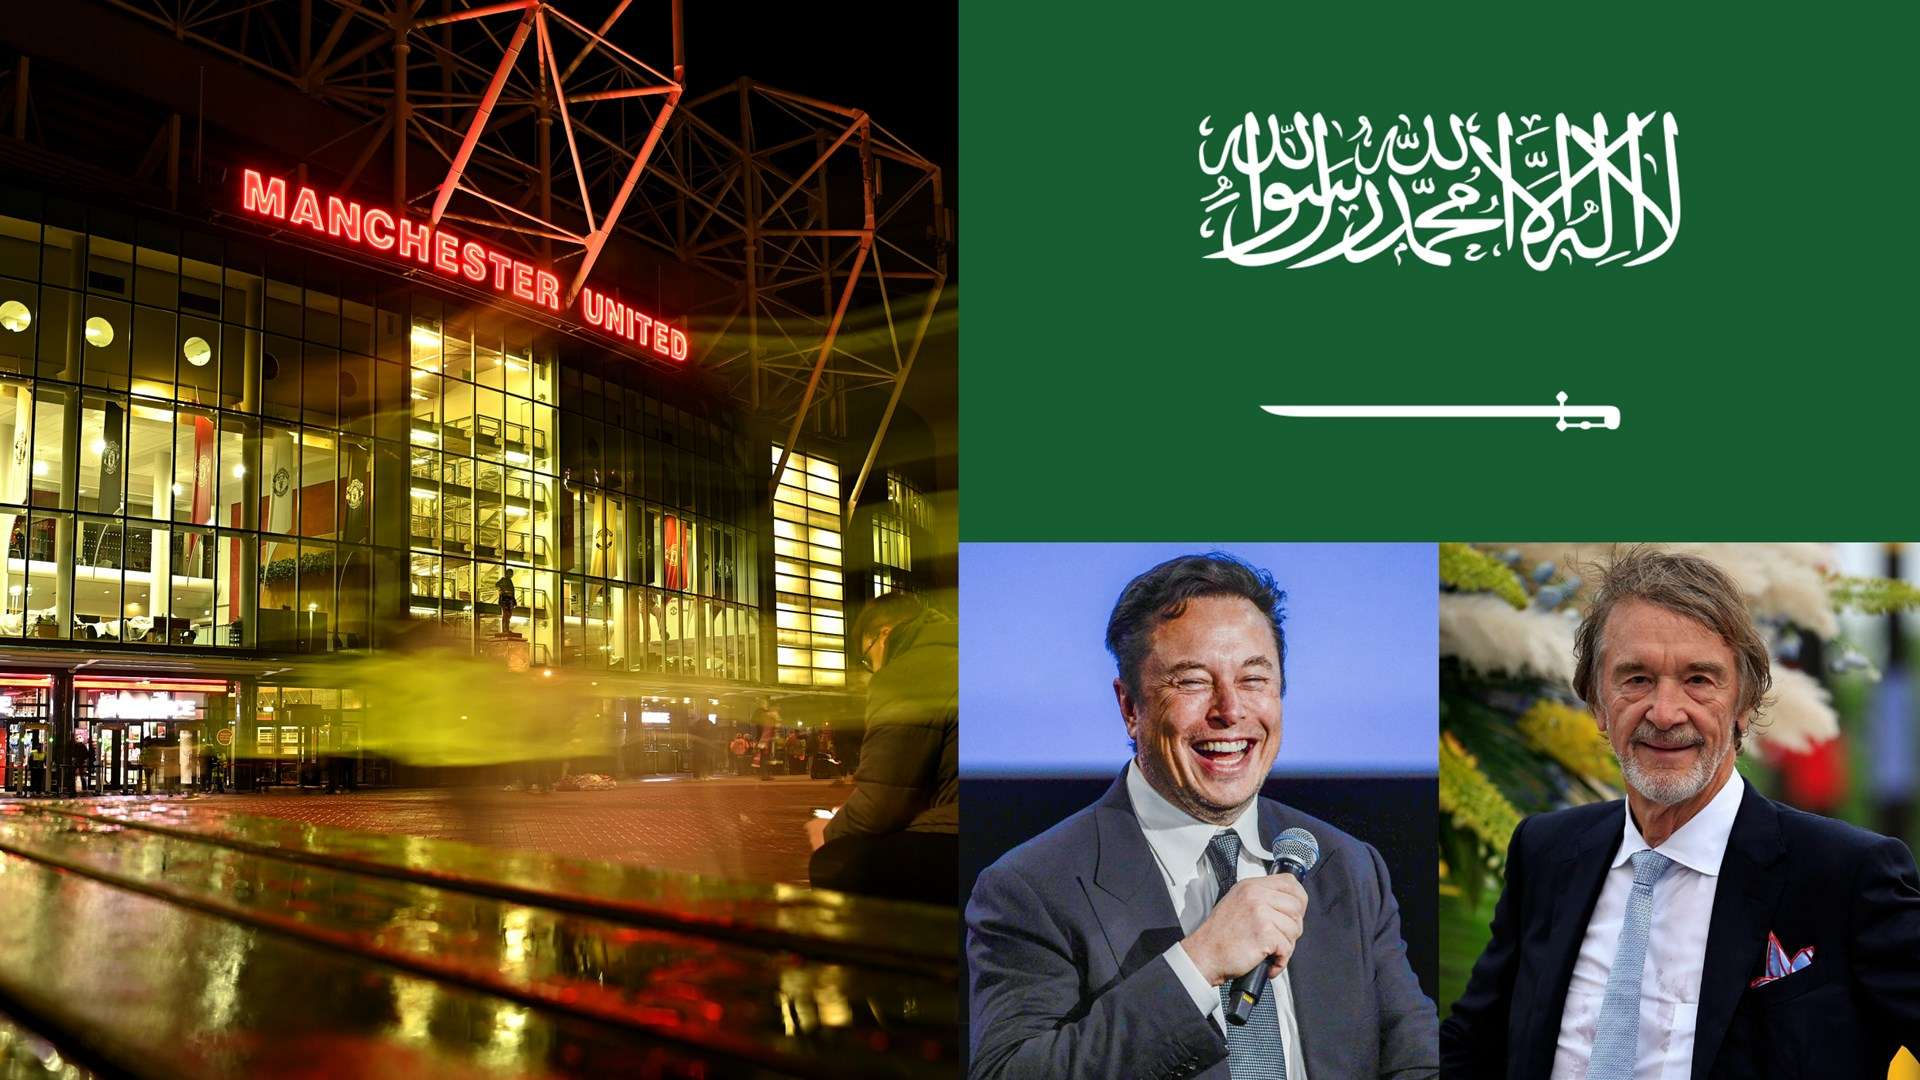 Manchester United takeover Saudi Arabia Elon Musk Sir Jim Ratcliffe